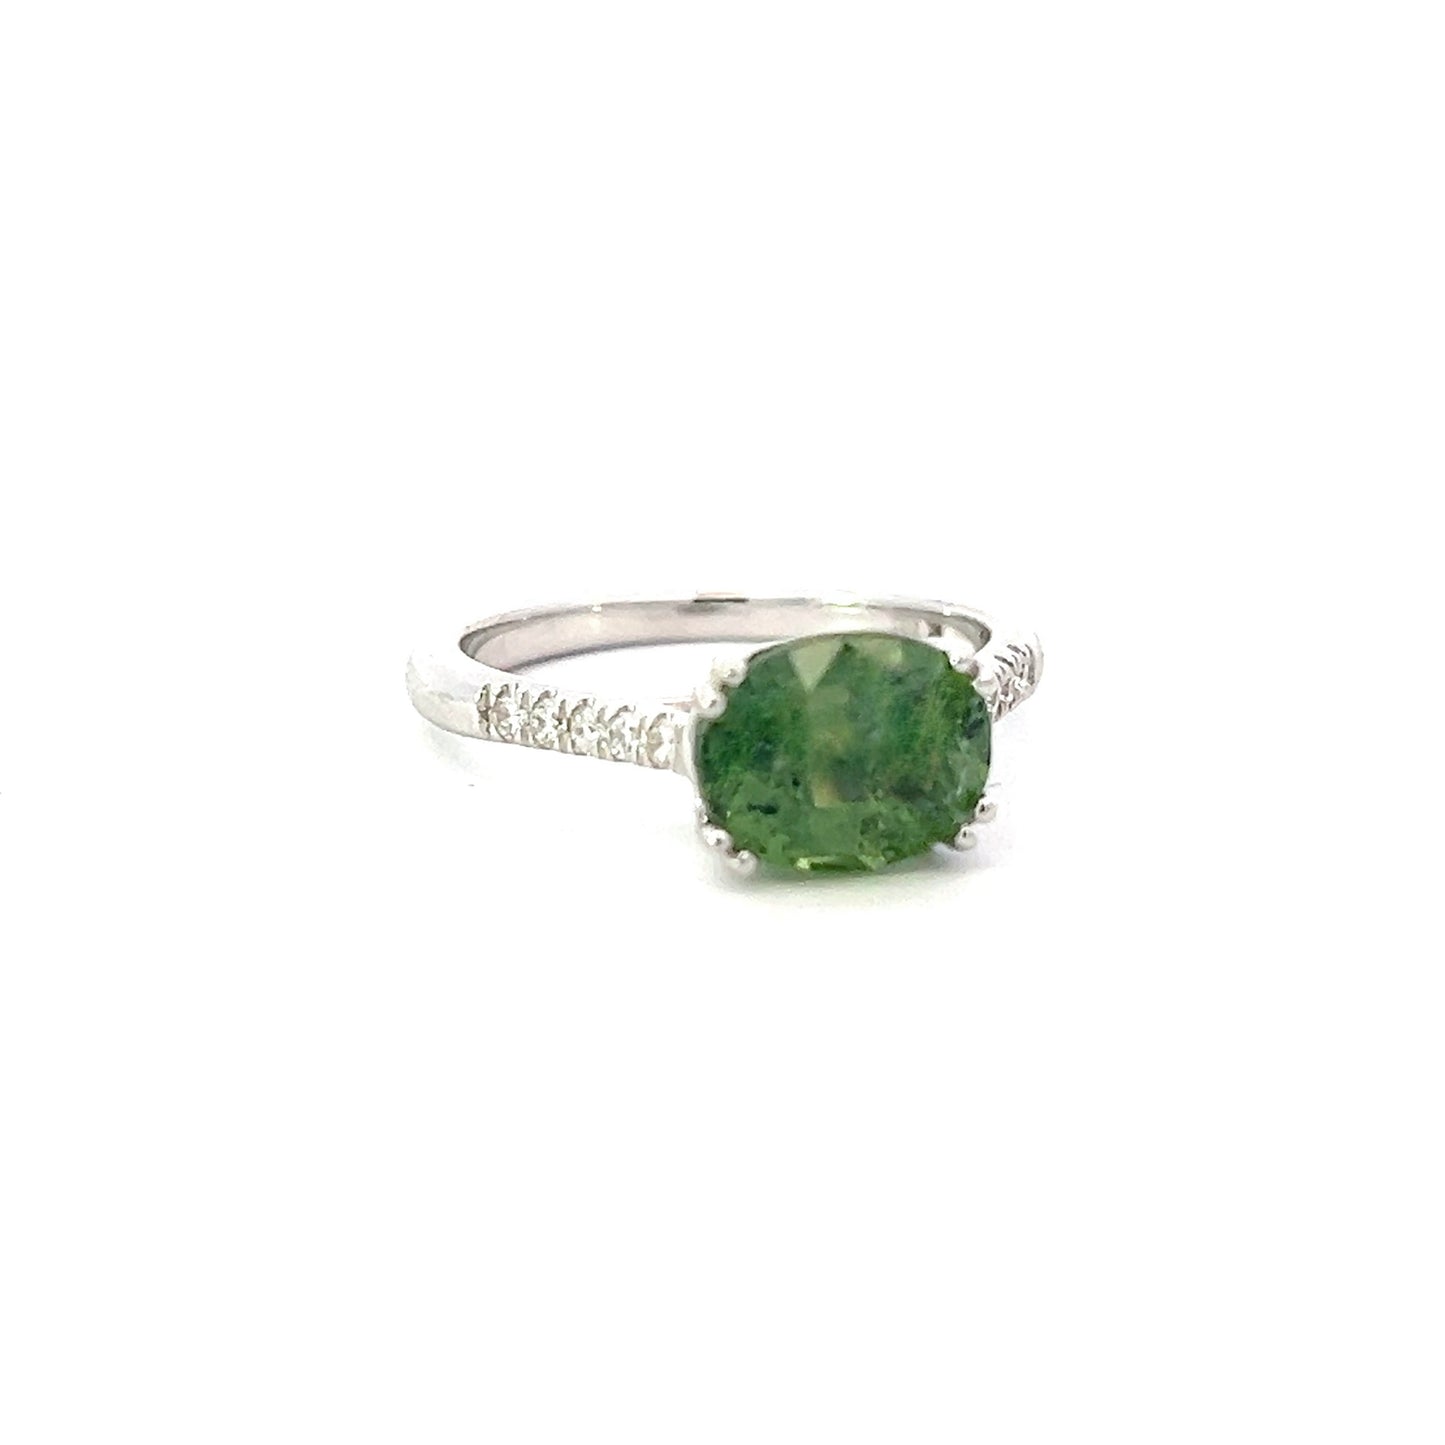 Natural Sapphire Diamond Ring 6.5 14k WG 2.89 TCW Certified $4,950 310999 - Certified Fine Jewelry